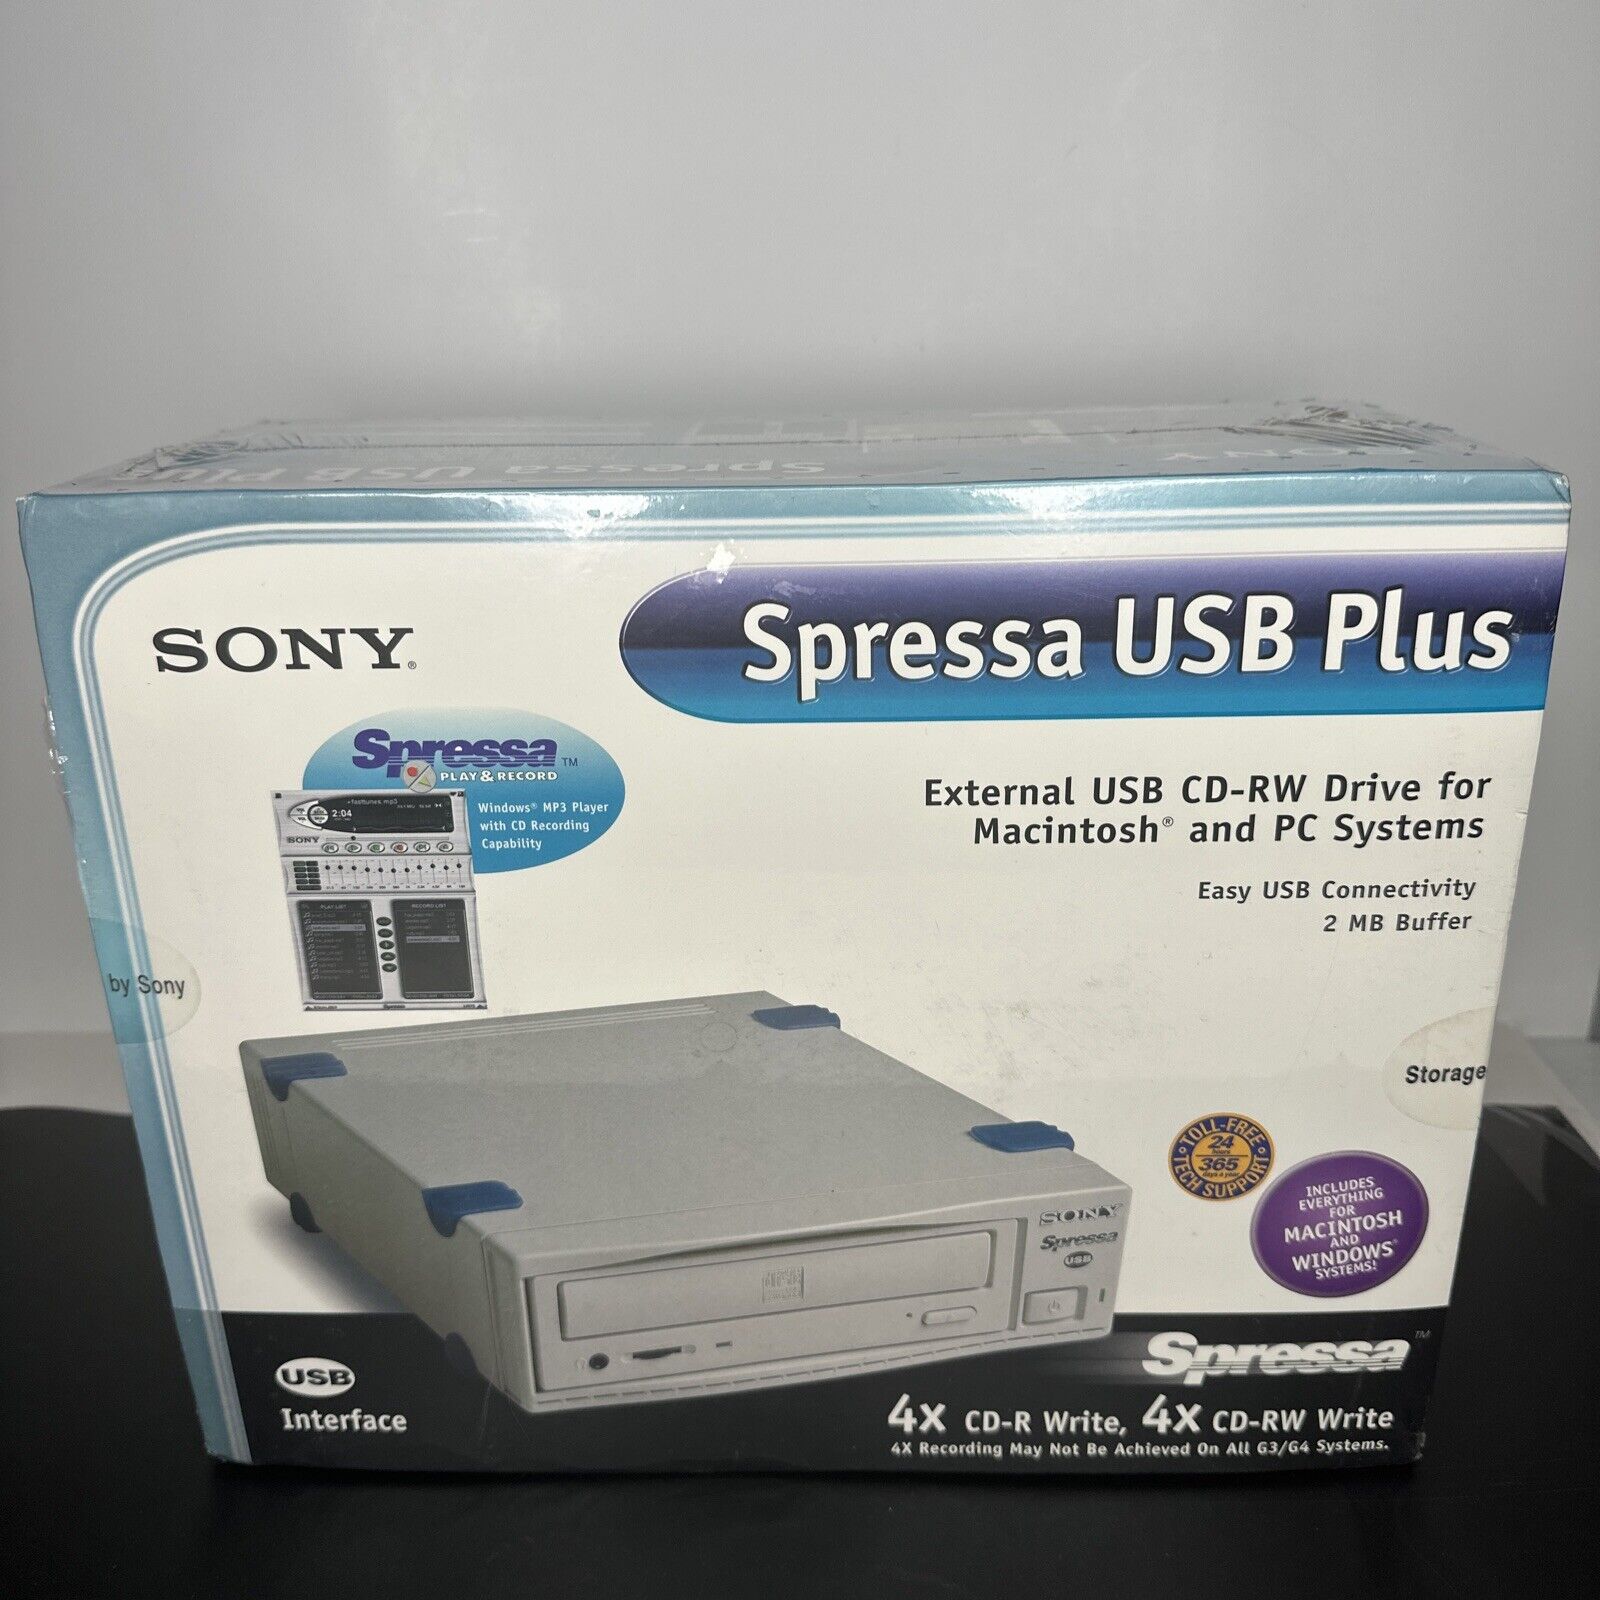 Sony Spressa USB Plus Extrernal USB CD-RW Drive CRX100E/X2 - BRAND NEW SEALED